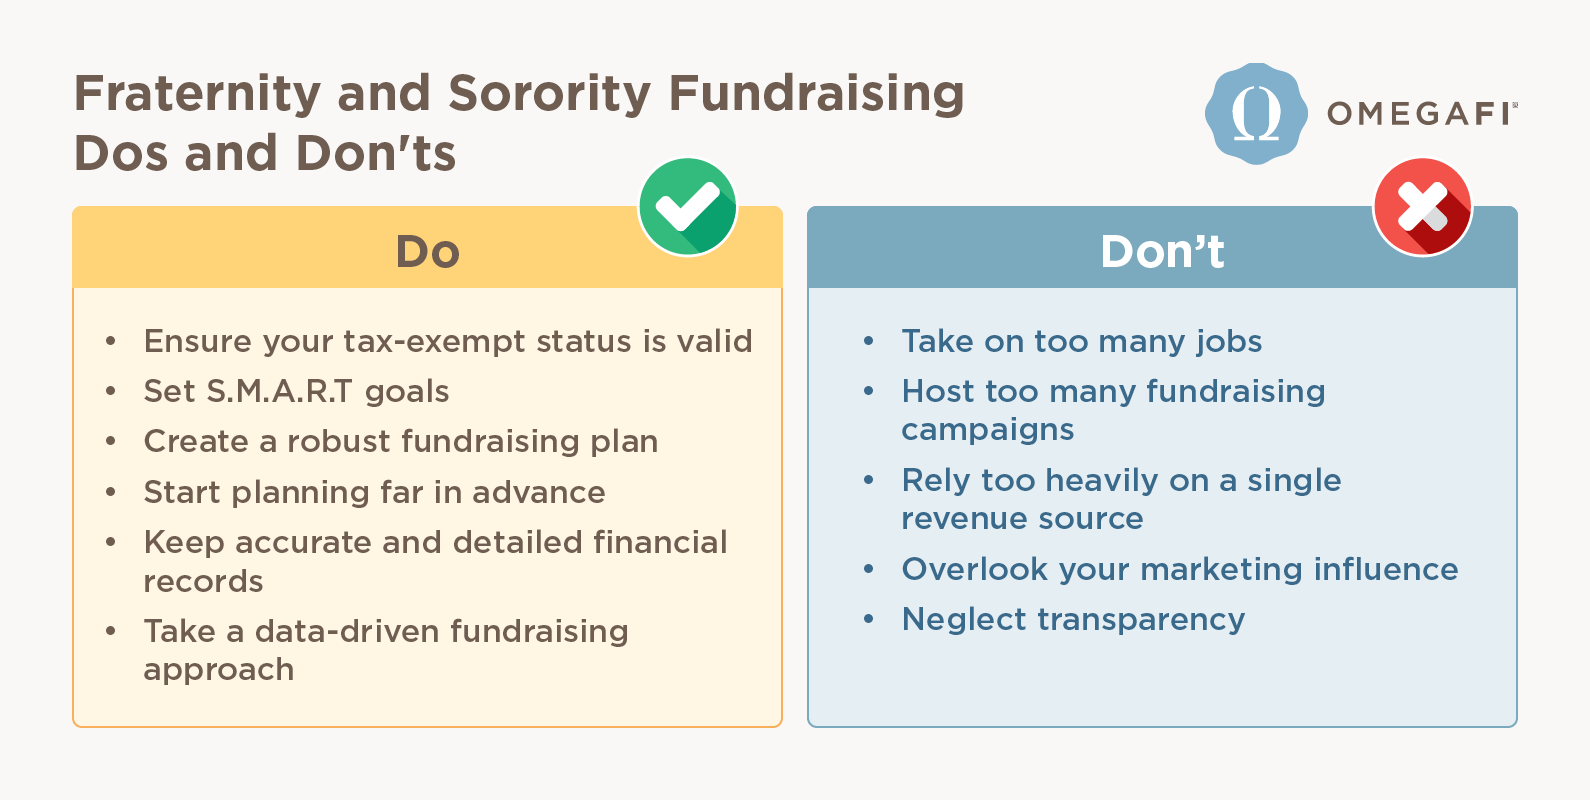 26+ Fundraising Ideas For Sororities